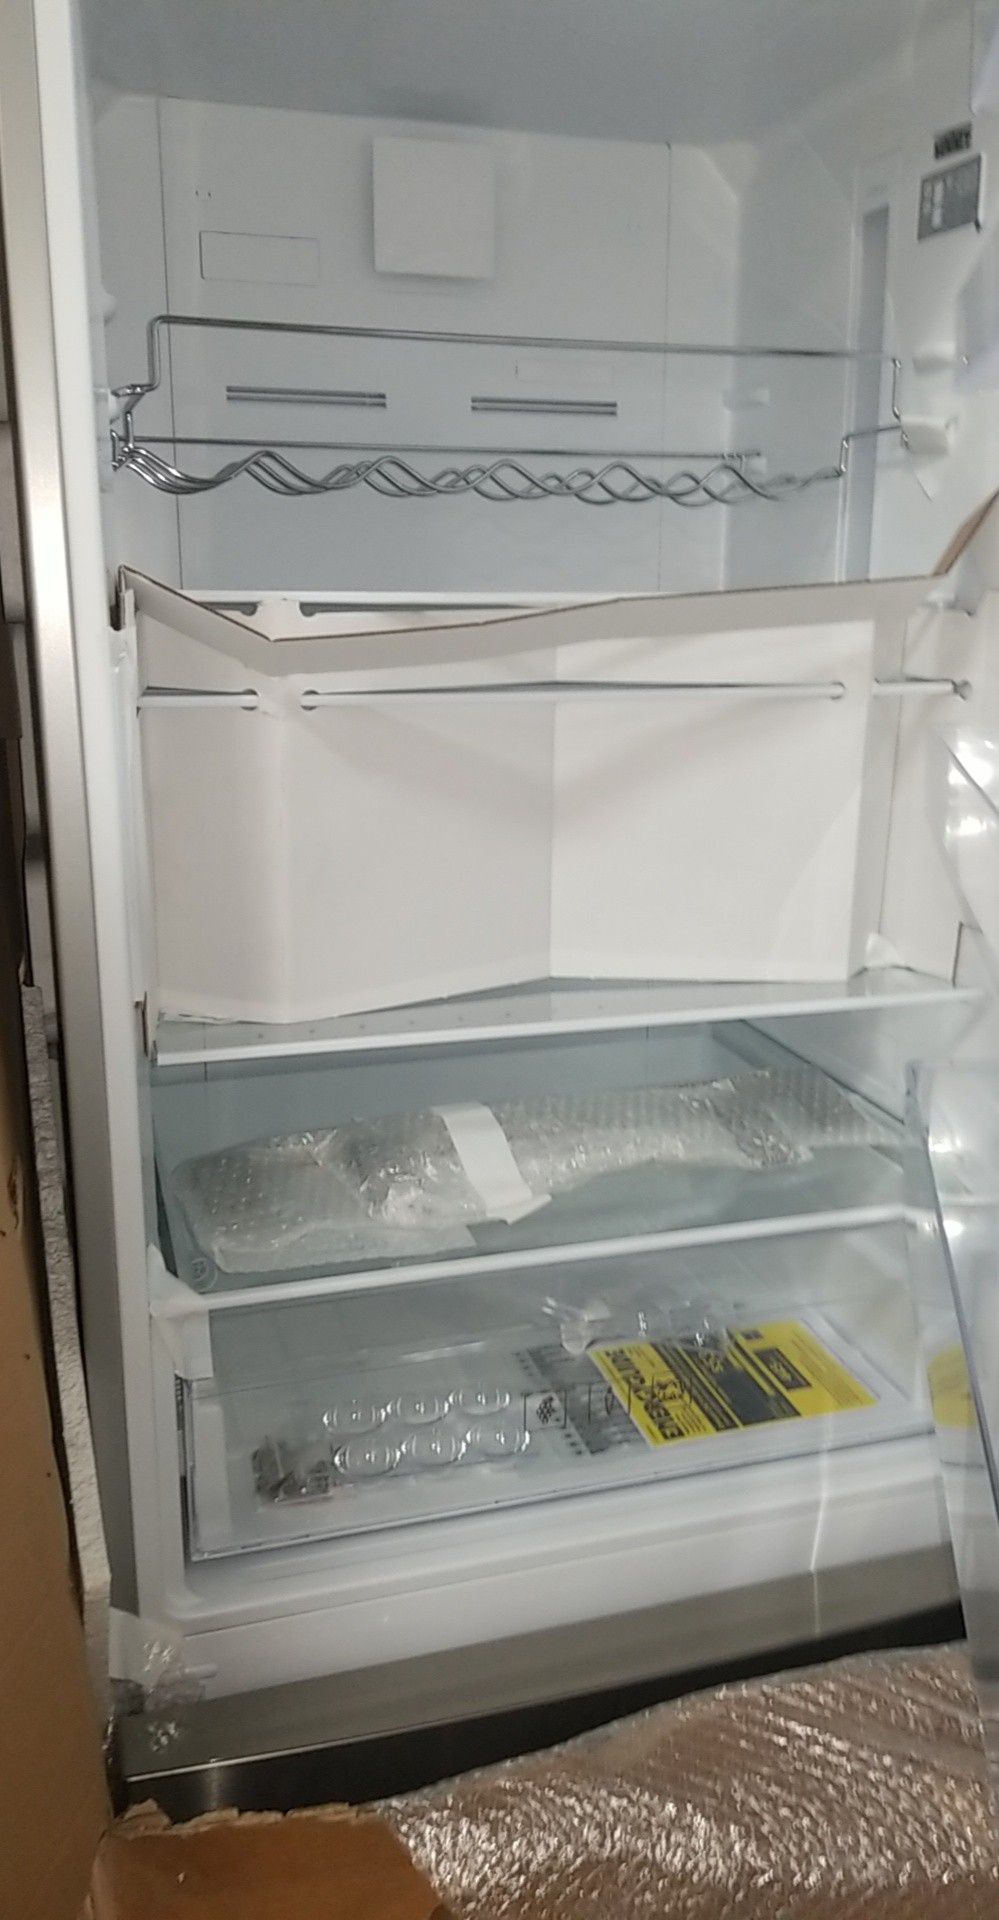 Refrigerator, bottom freezer